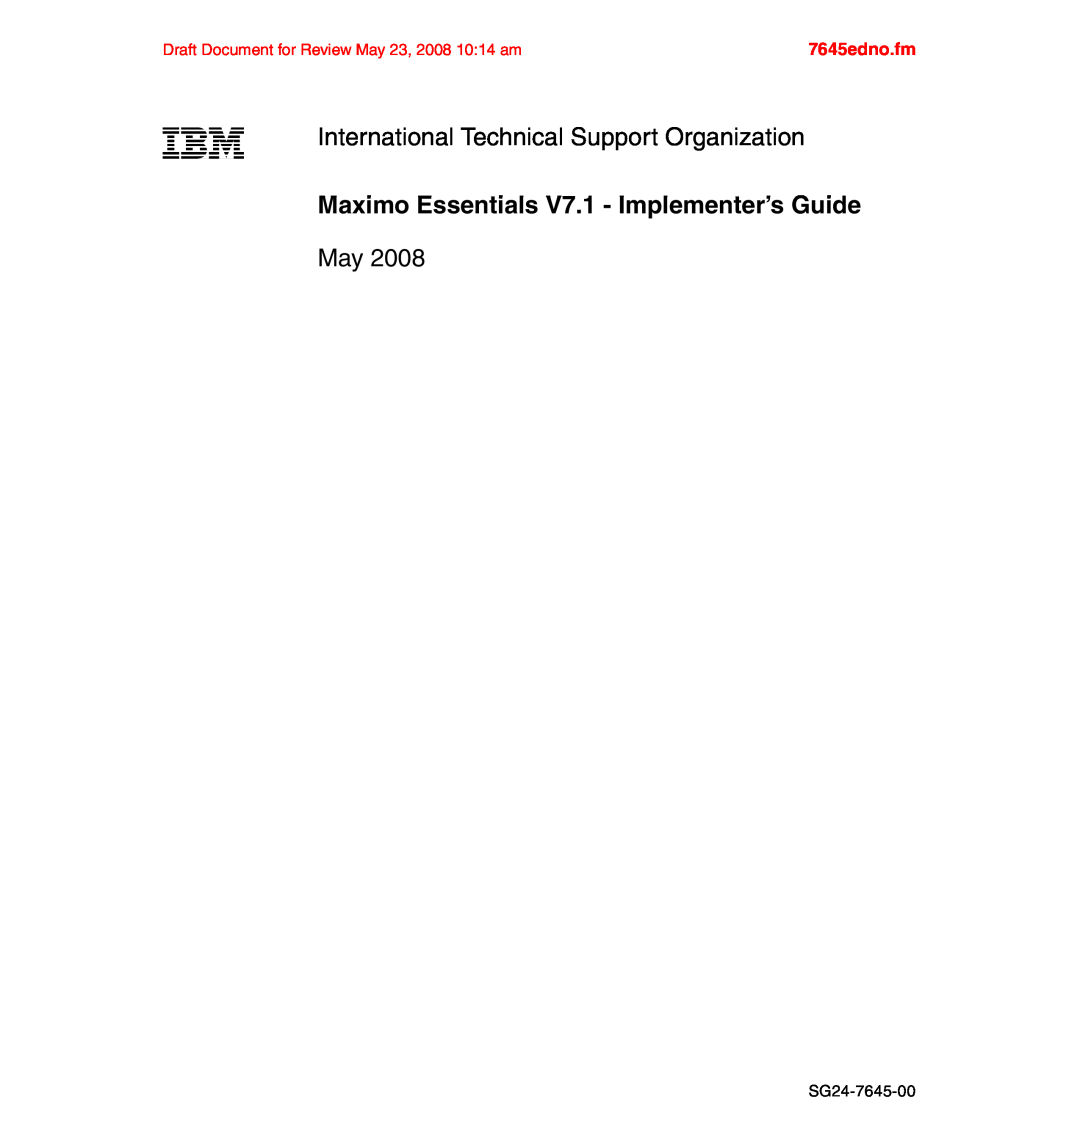 IBM SG24-7645-00 International Technical Support Organization, 7645edno.fm, Maximo Essentials V7.1 - Implementer’s Guide 